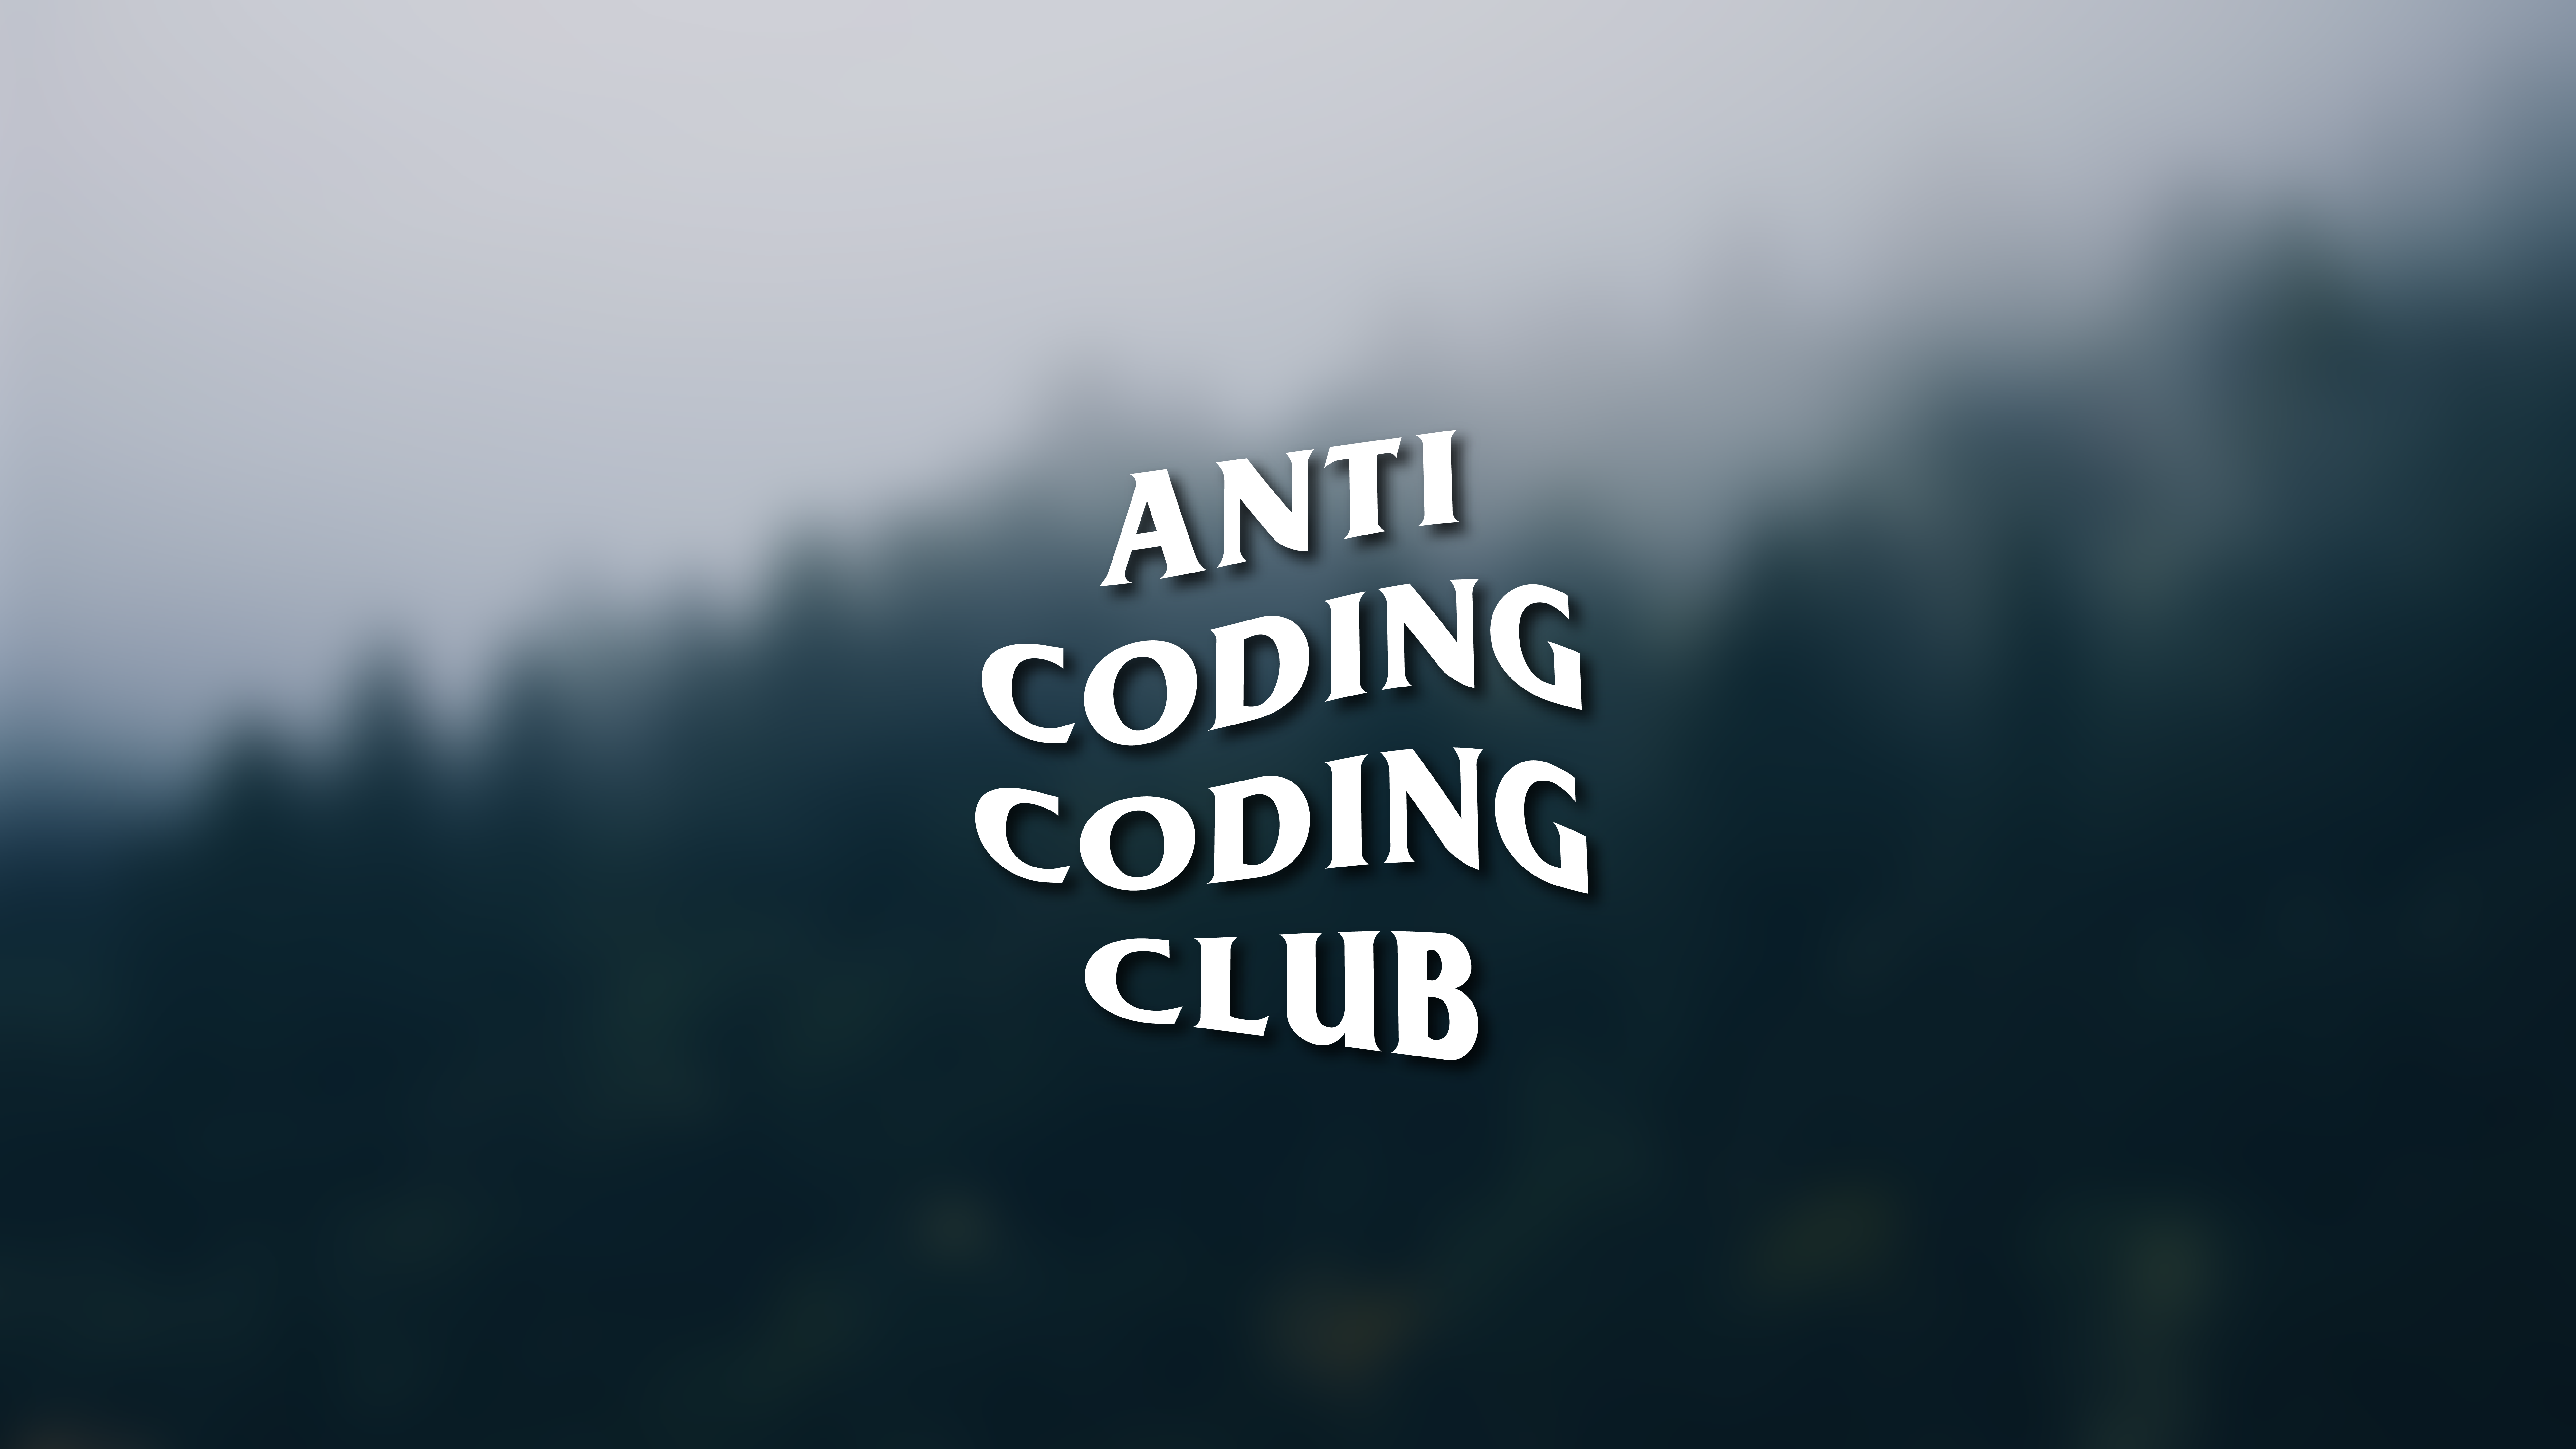 ANTI CODING CODING CLUB